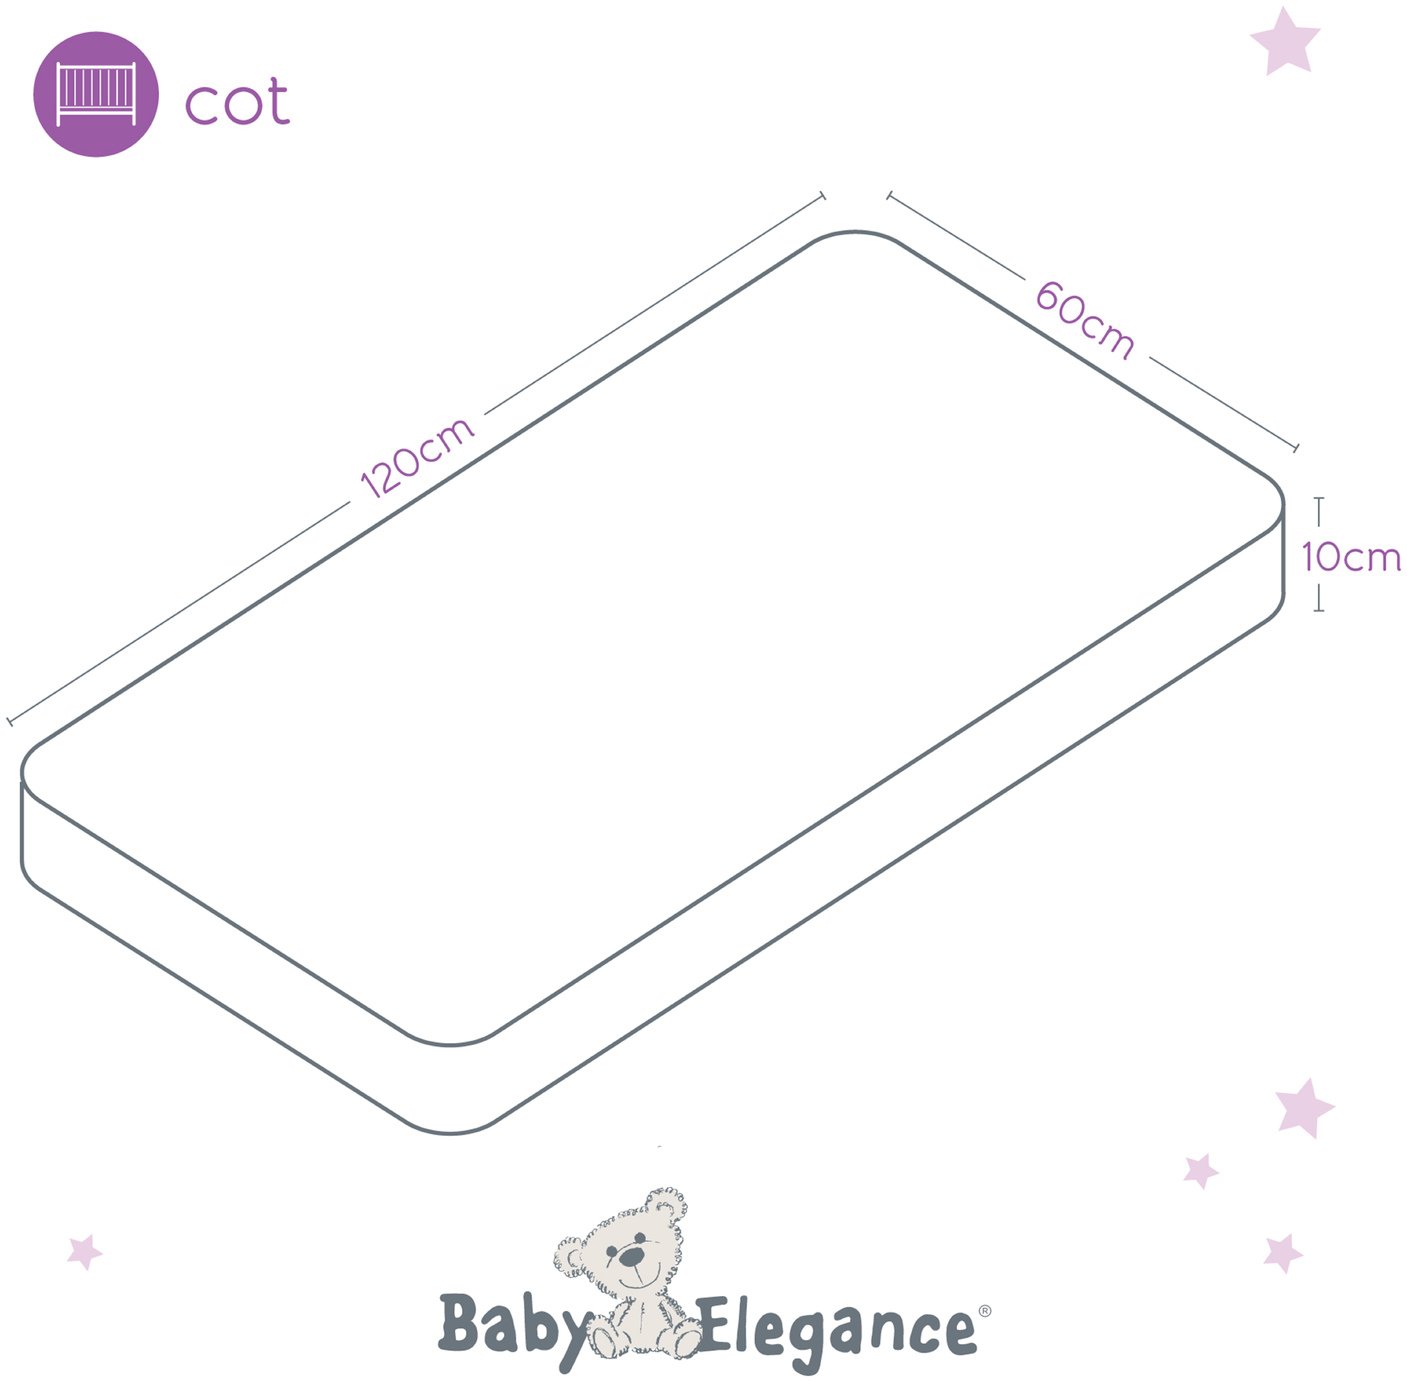 Baby Elegance 140 x 70cm Pocket Sprung Cot Bed Mattress Review